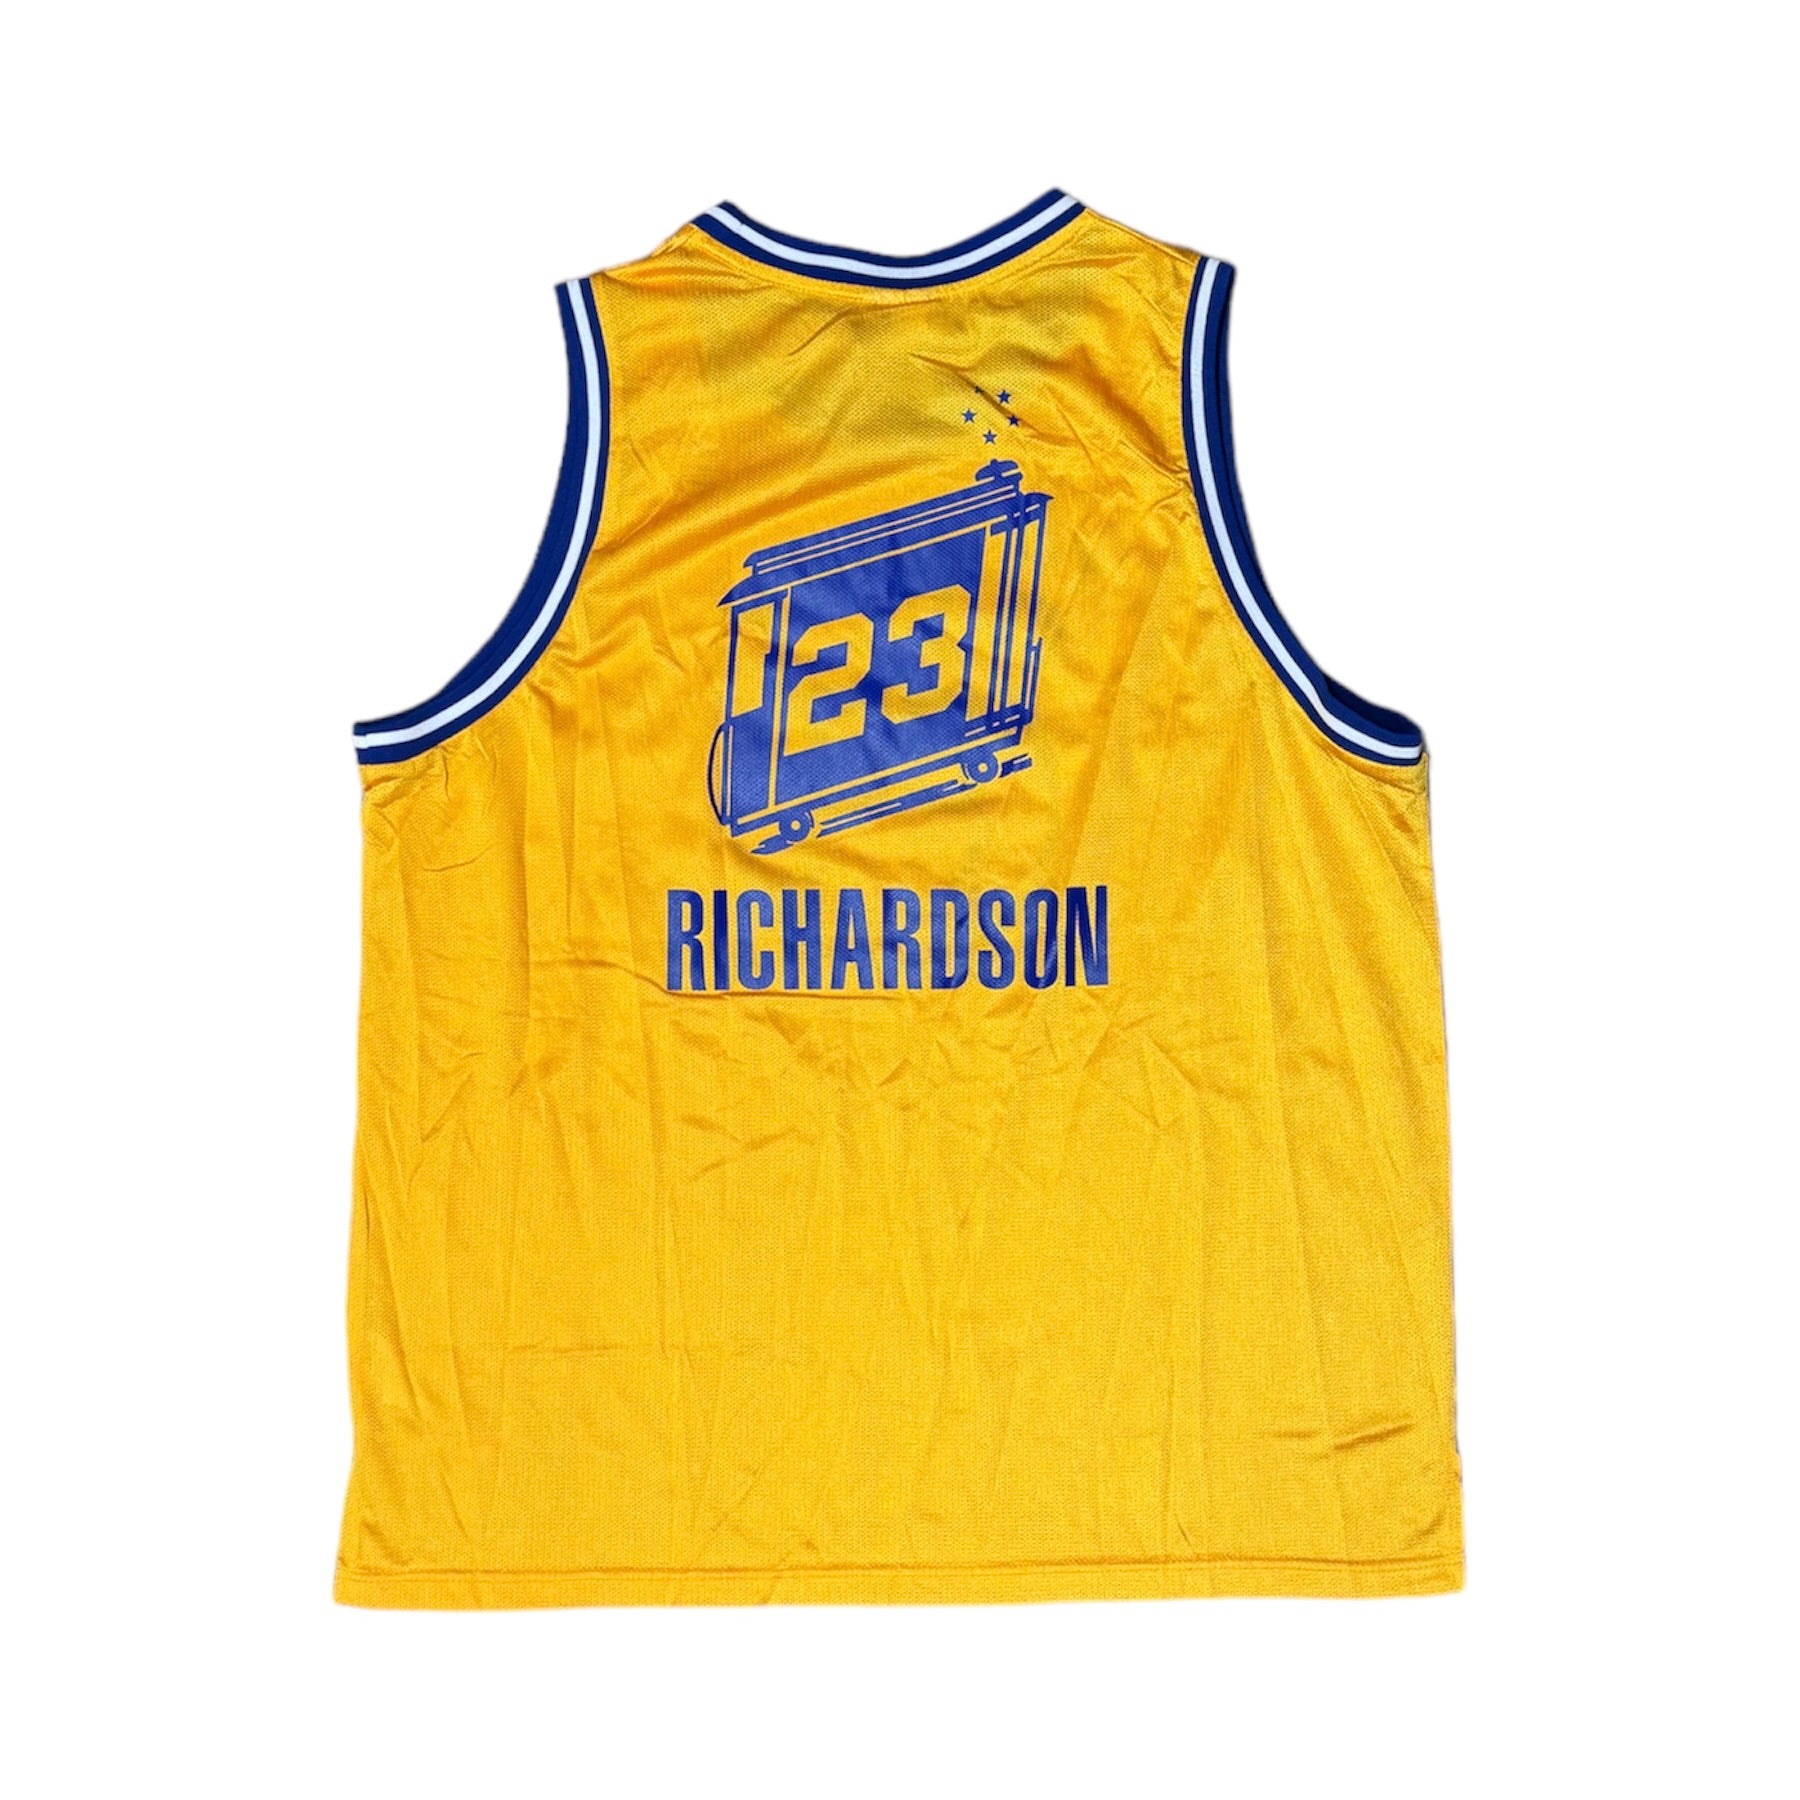 Reebok NBA Golden State Warriors Richardson Hardwood Classics Basketball Jersey